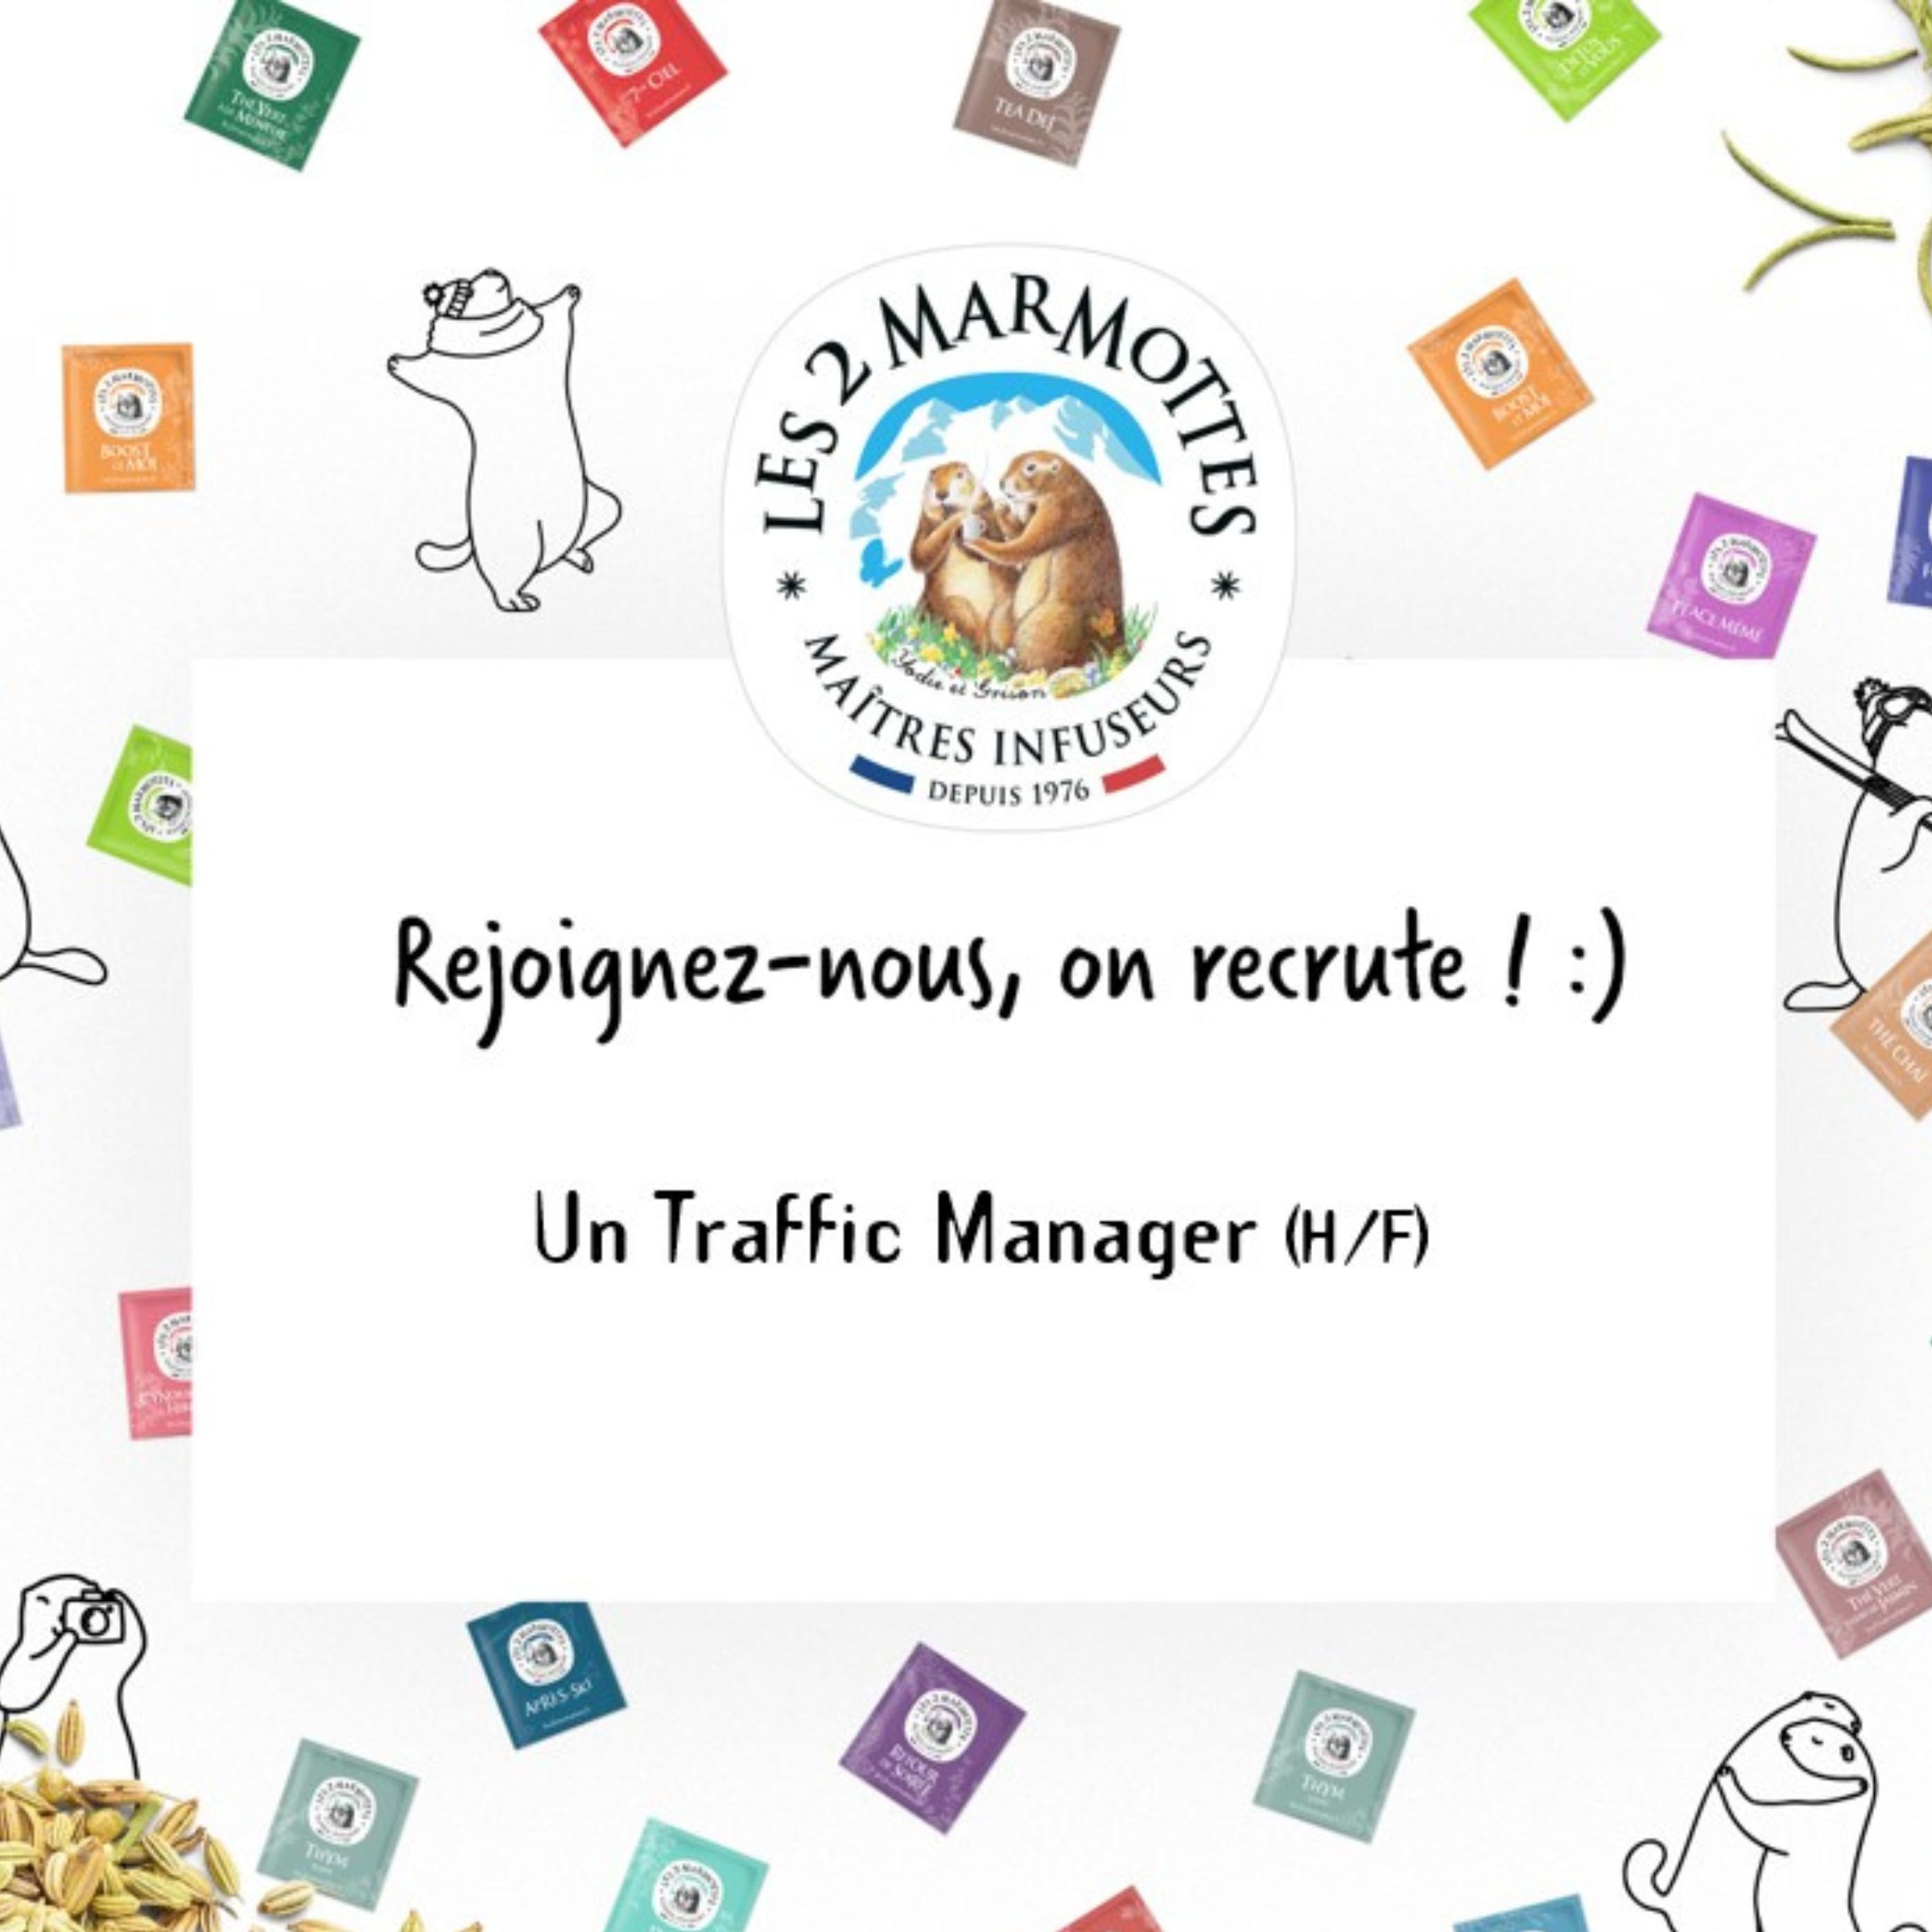 Les marmottes recrutent une(e) traffic manager